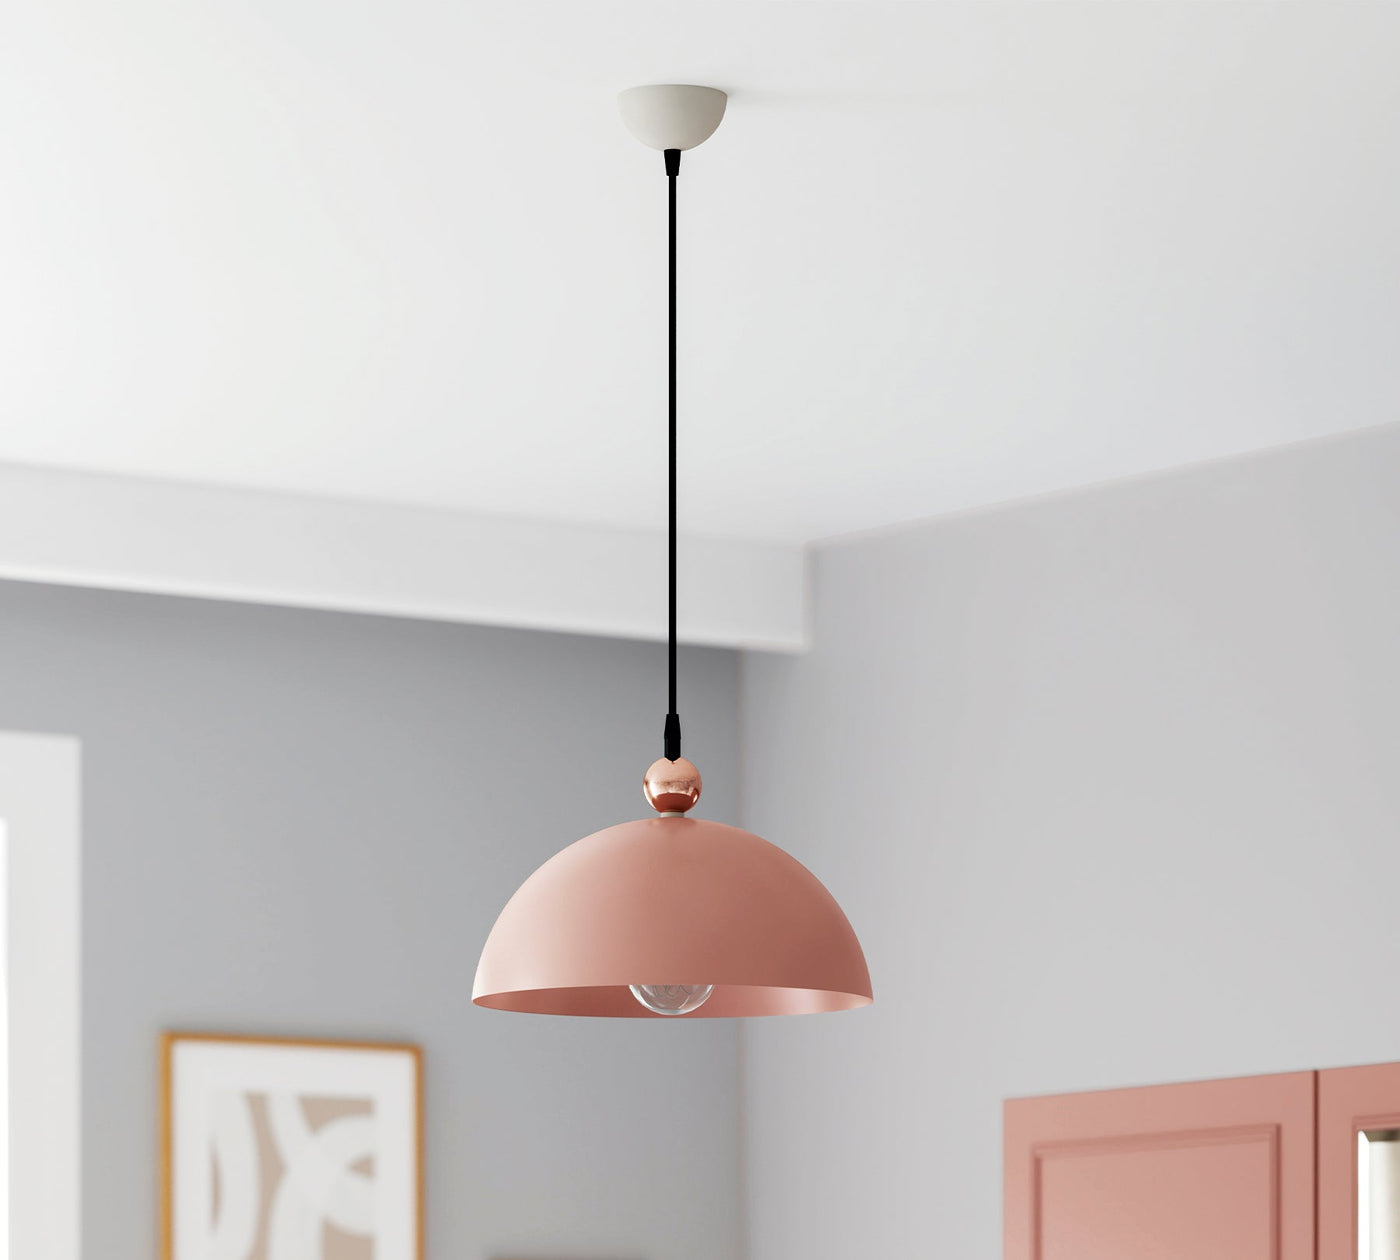 Rossy Ceiling Lamp